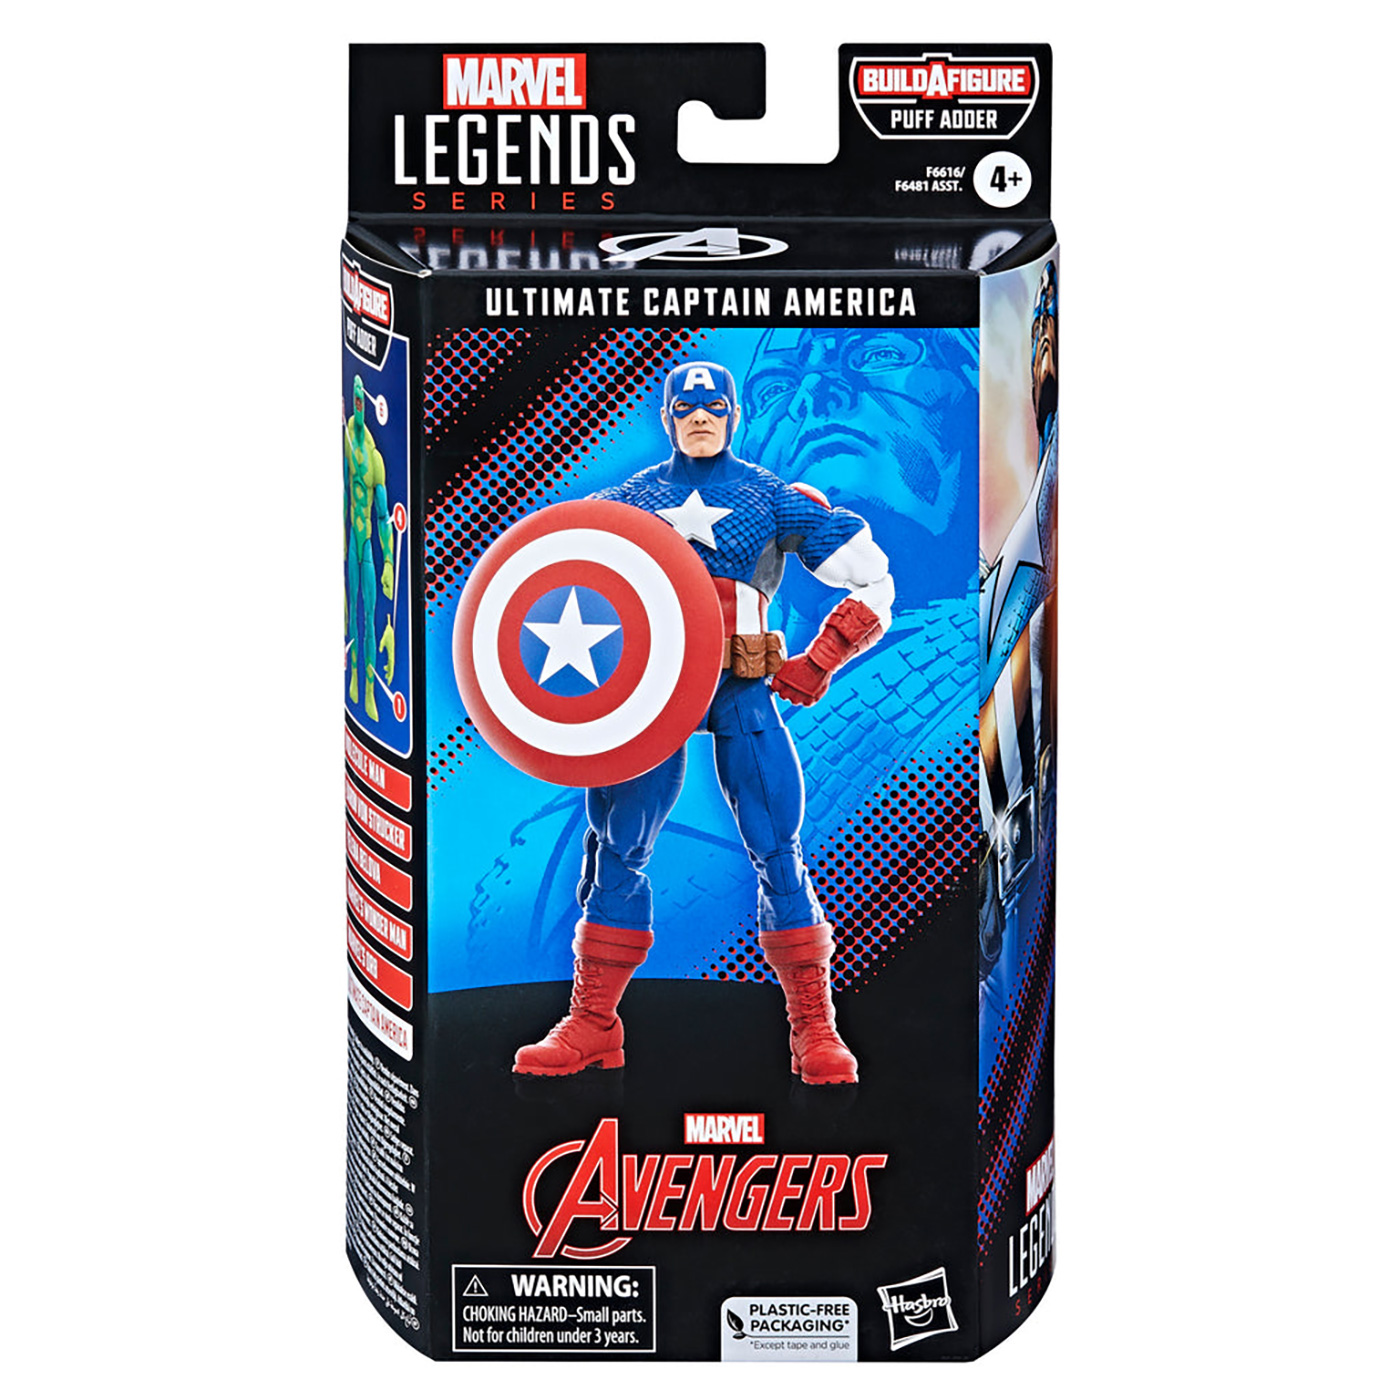 Marvel Legends BAF Puff Adder Avengers Ultimate Captain America Comic 6-Inch Action Figure画像